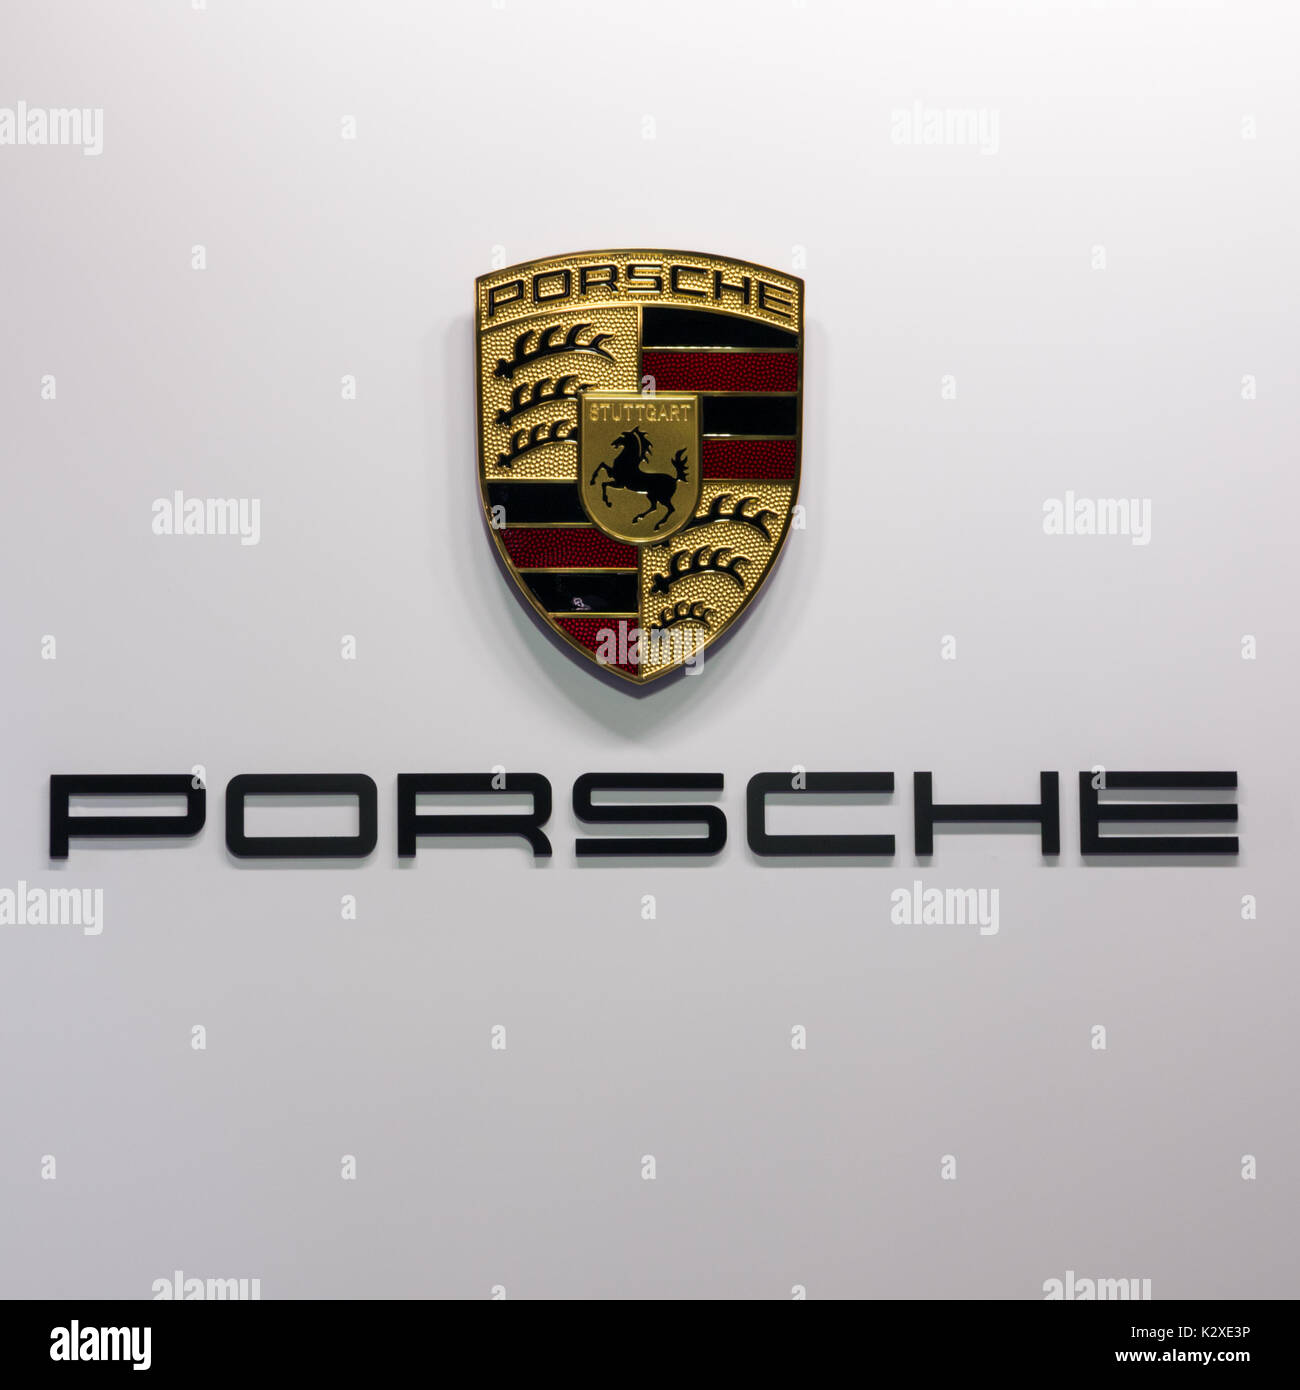 BRUSSELS - JAN 19, 2017: Porsche car manufacturer logo at the Brussel Auto Salon Motor Show Stock Photo